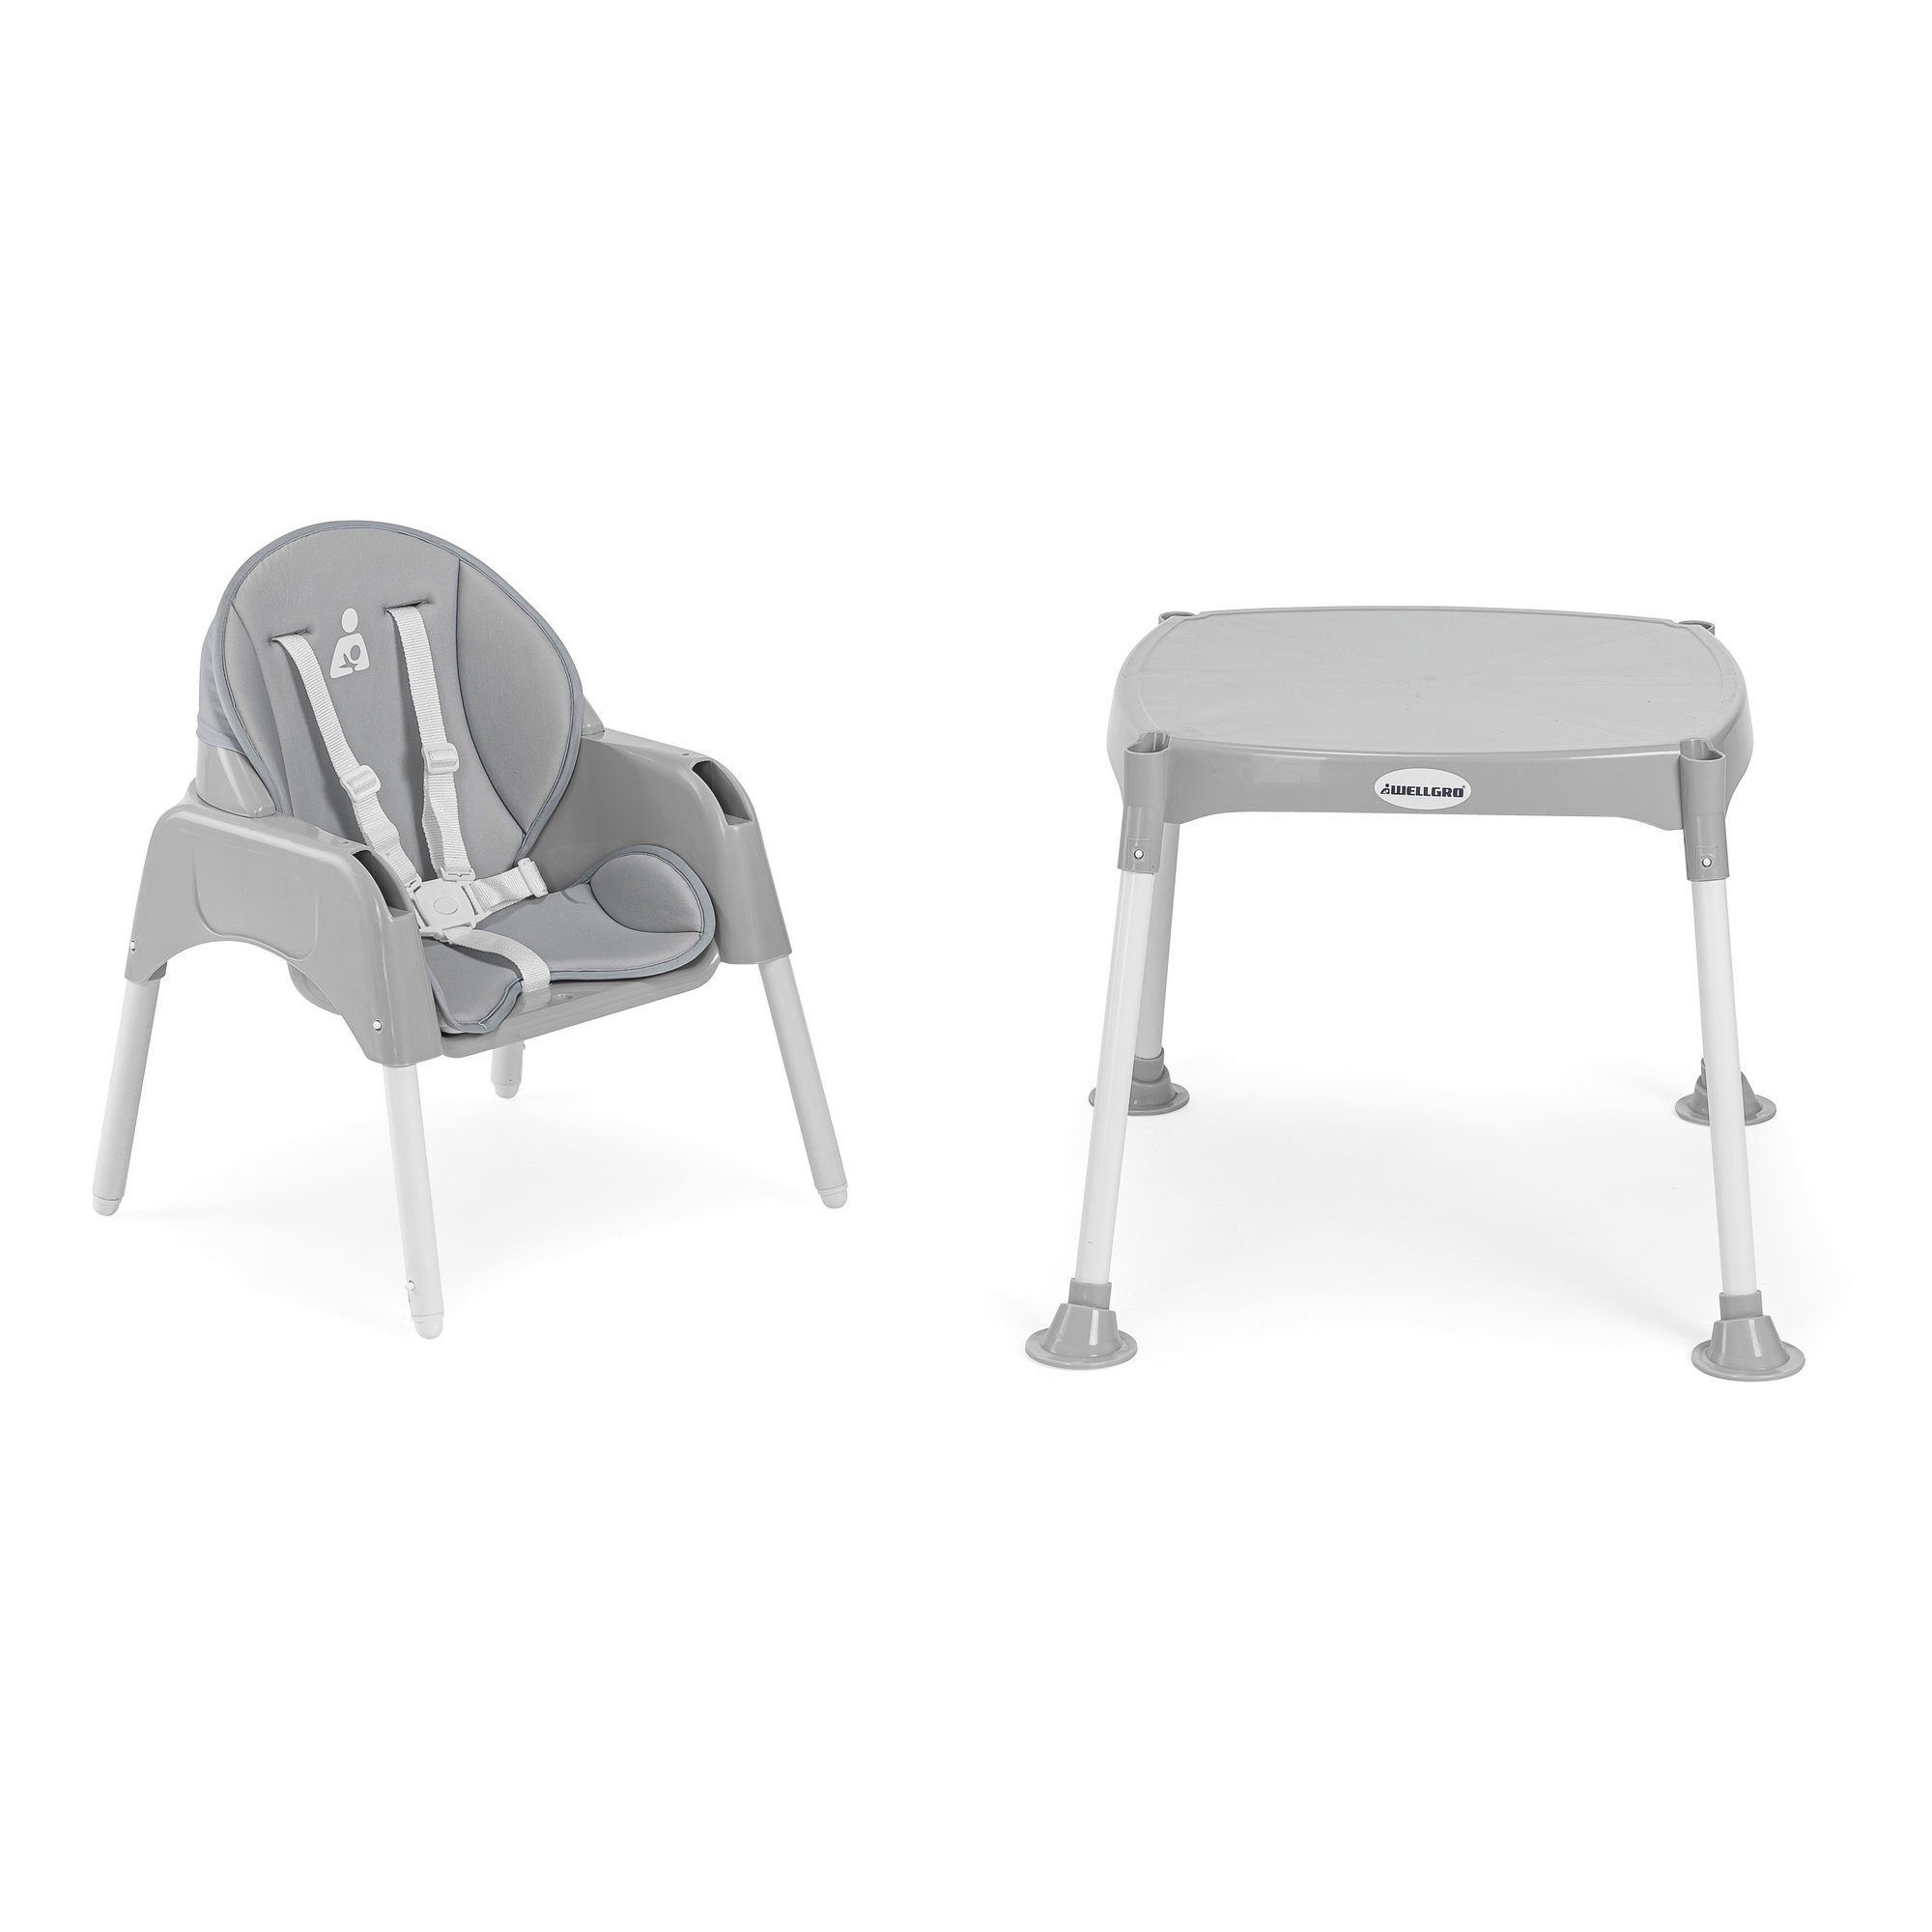 Kindersitze, Grau, Wallity 100% WLG1331, Hochstuhl Plastik